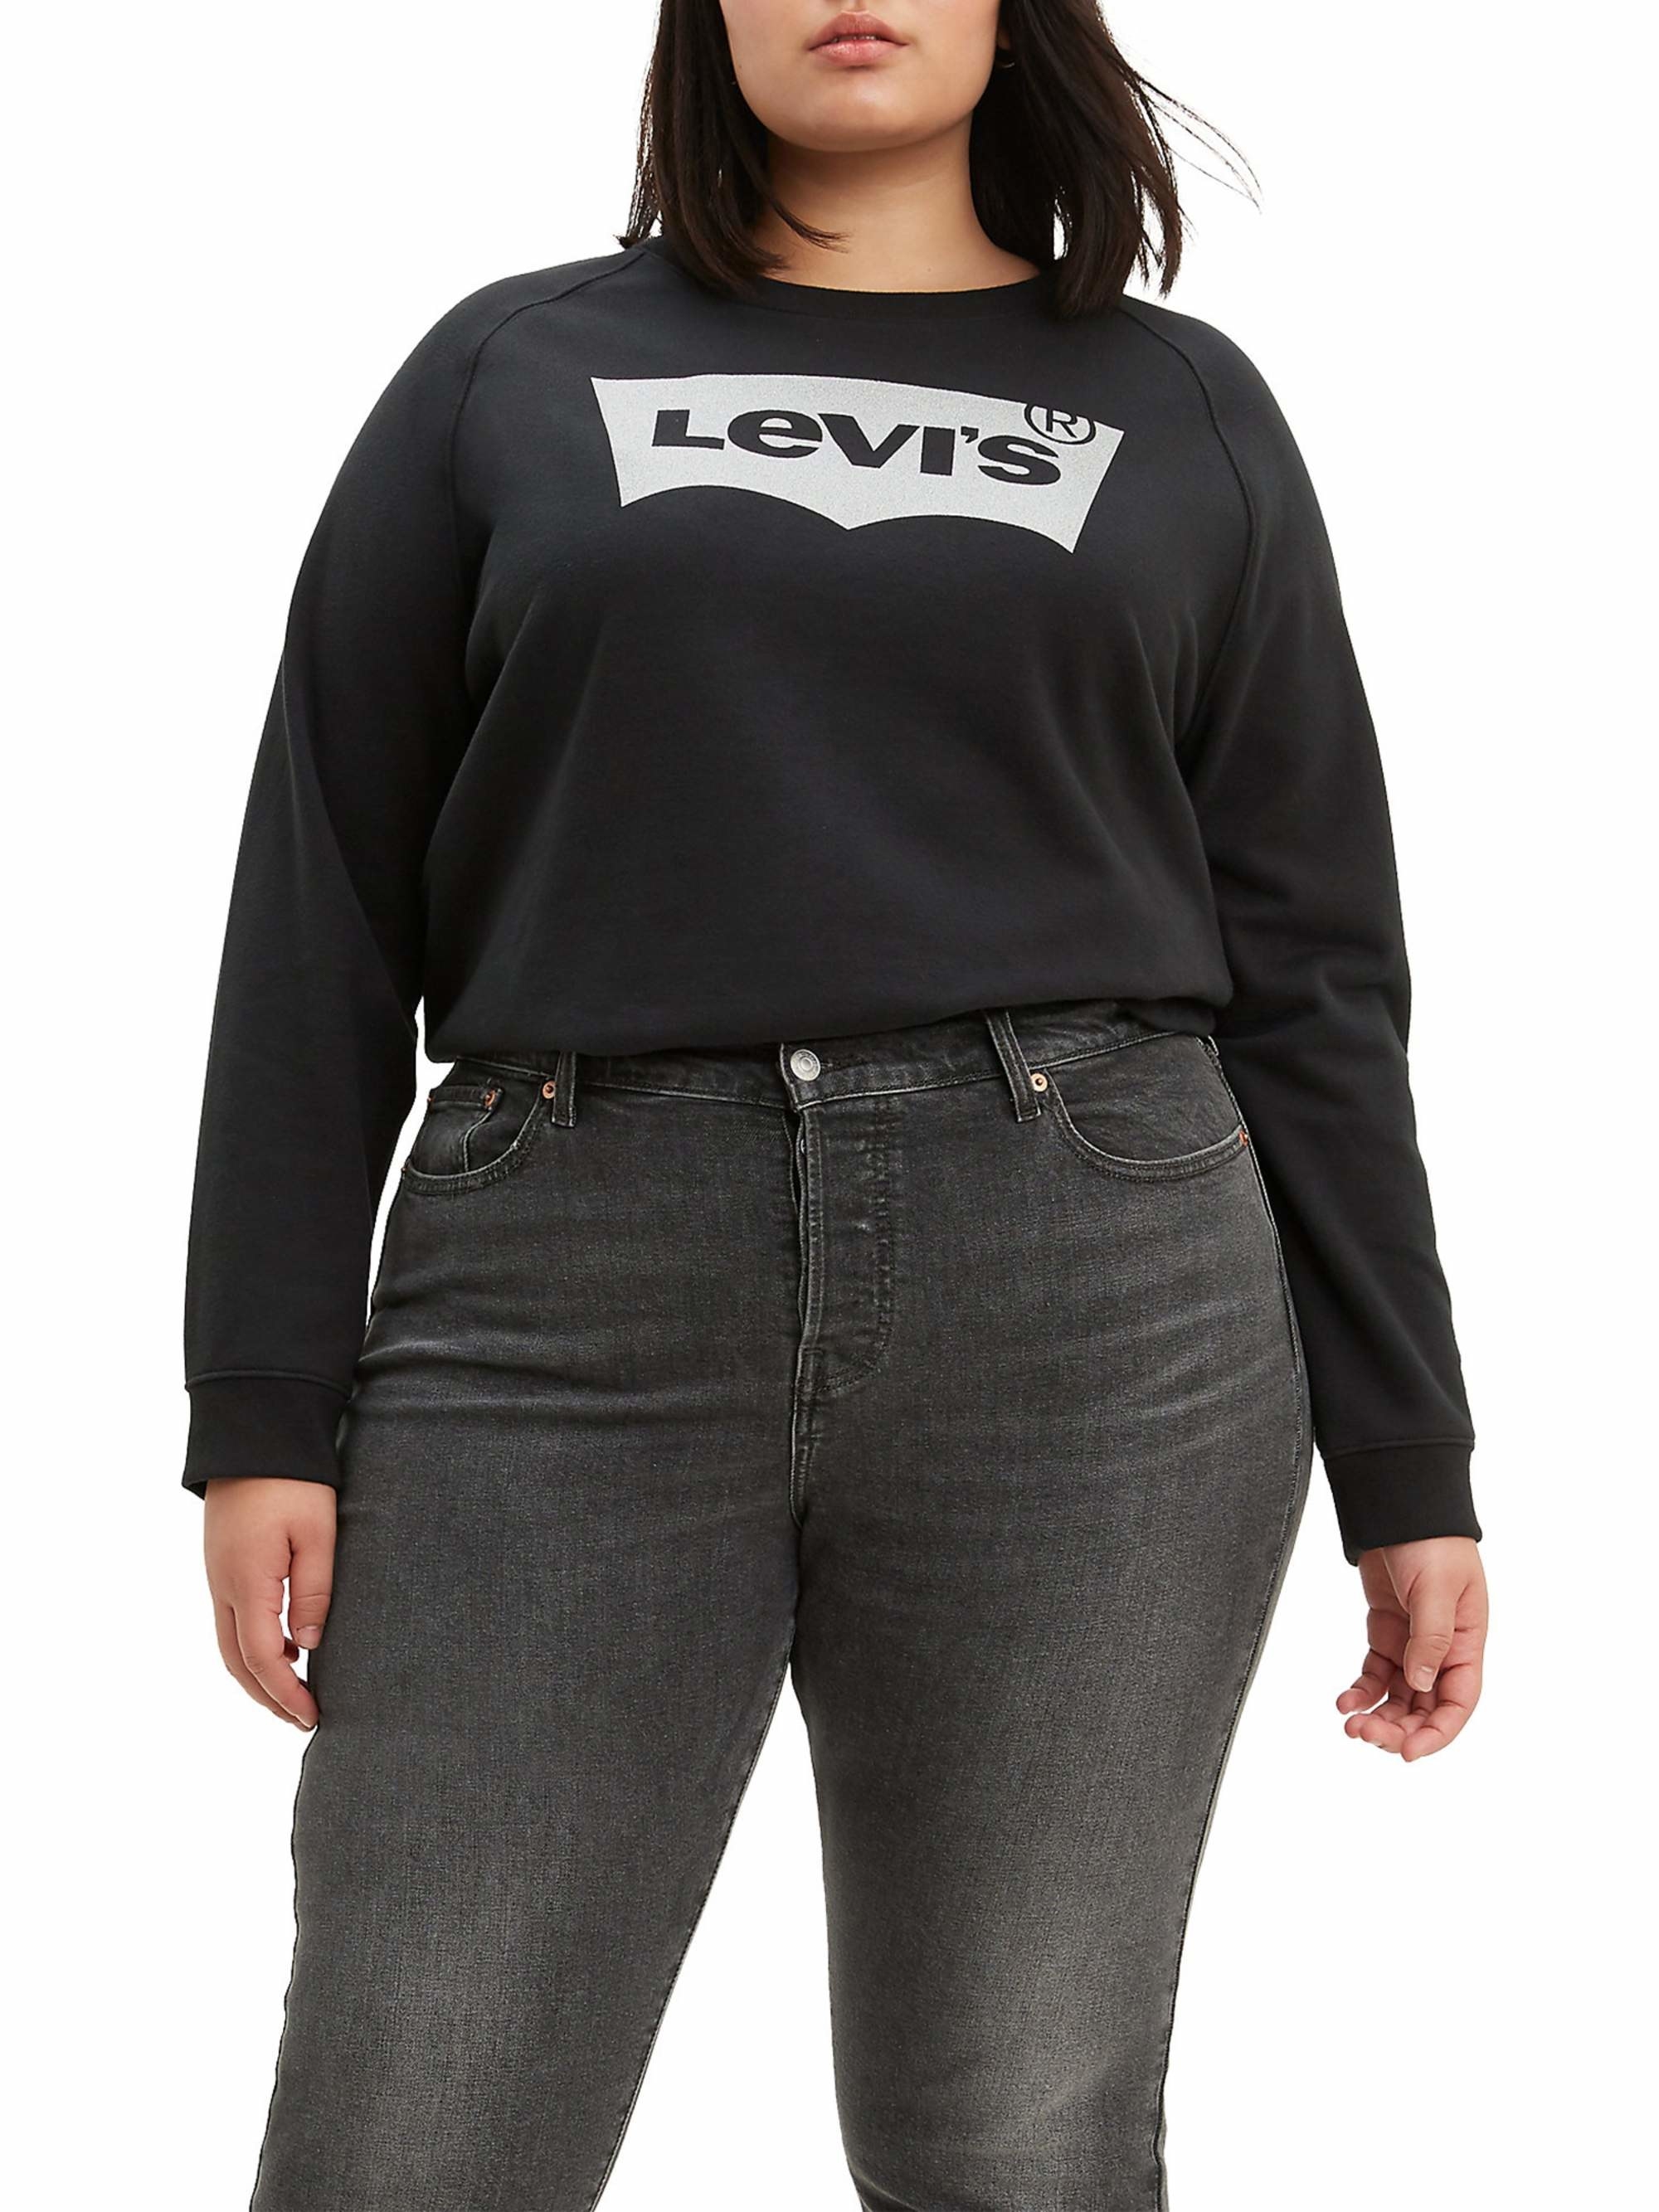 person wearing a black levi&#x27;s crewneck sweatshirt and black jeans